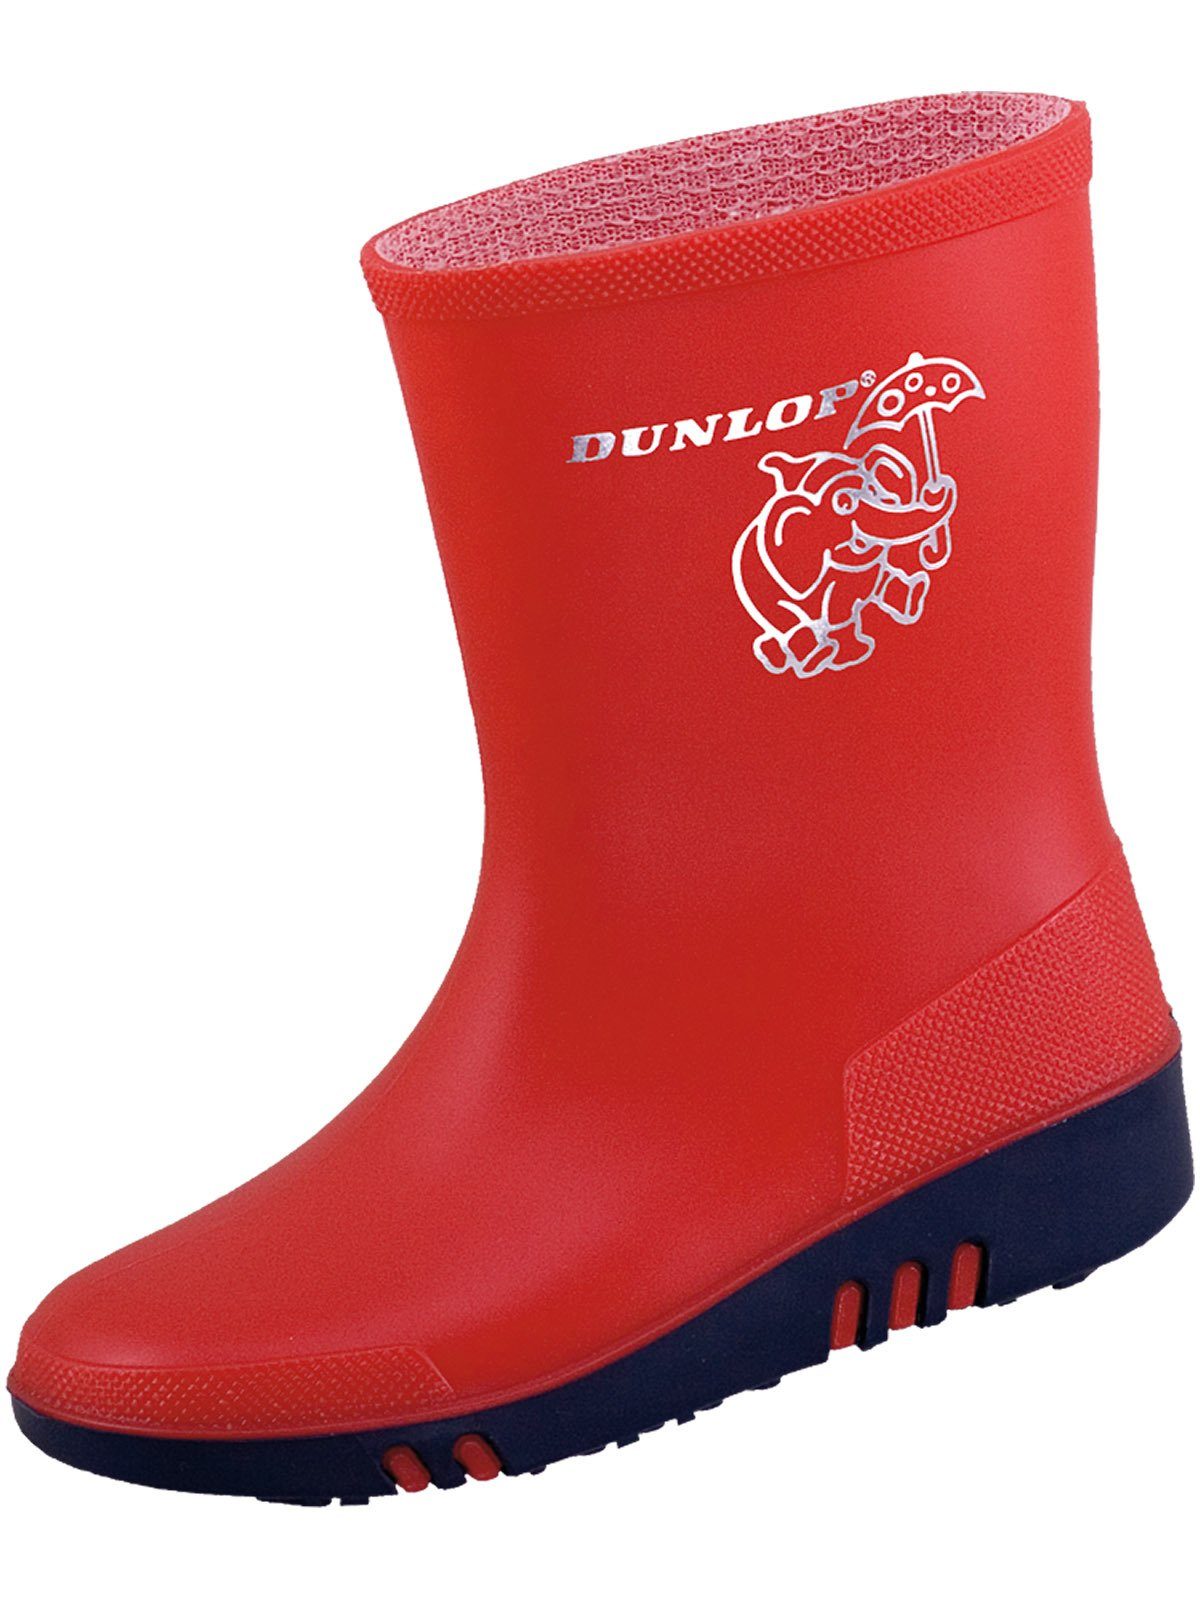 Dunlop_Workwear Dunlop Mini rot/blau Gummistiefel